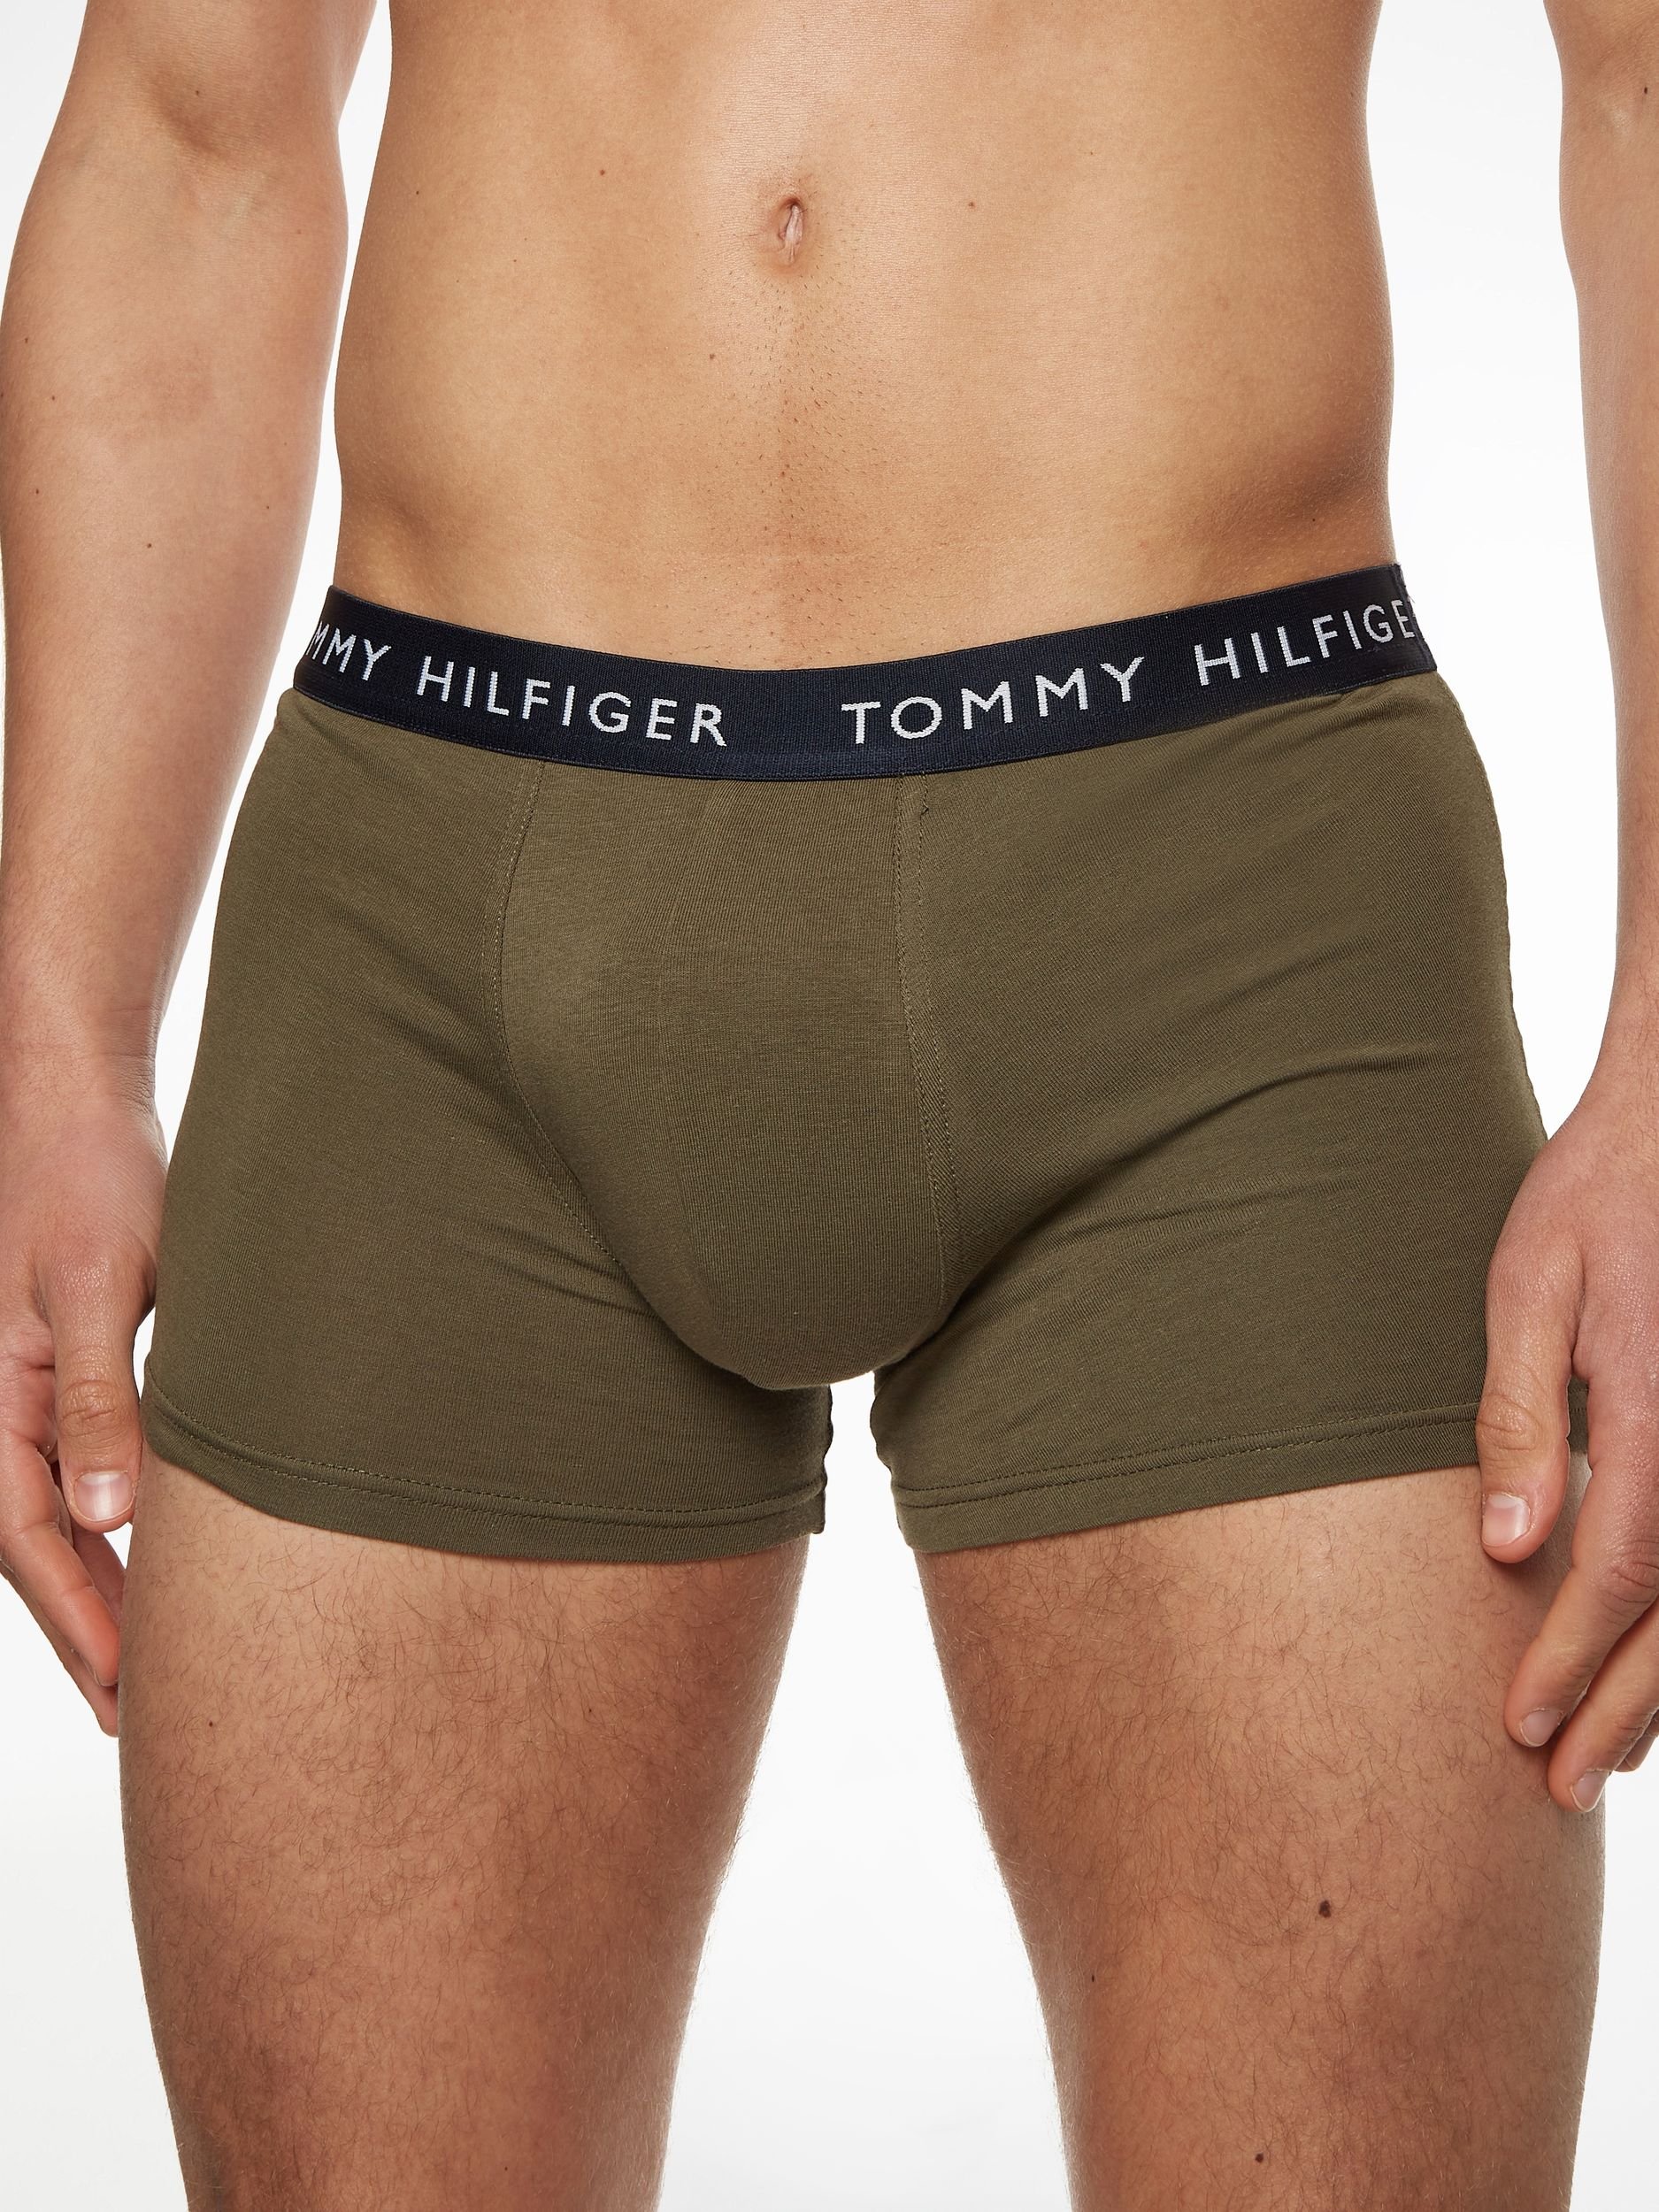 Tommy Hilfiger Underwear/Swimwear (PVH Group) Multipack 